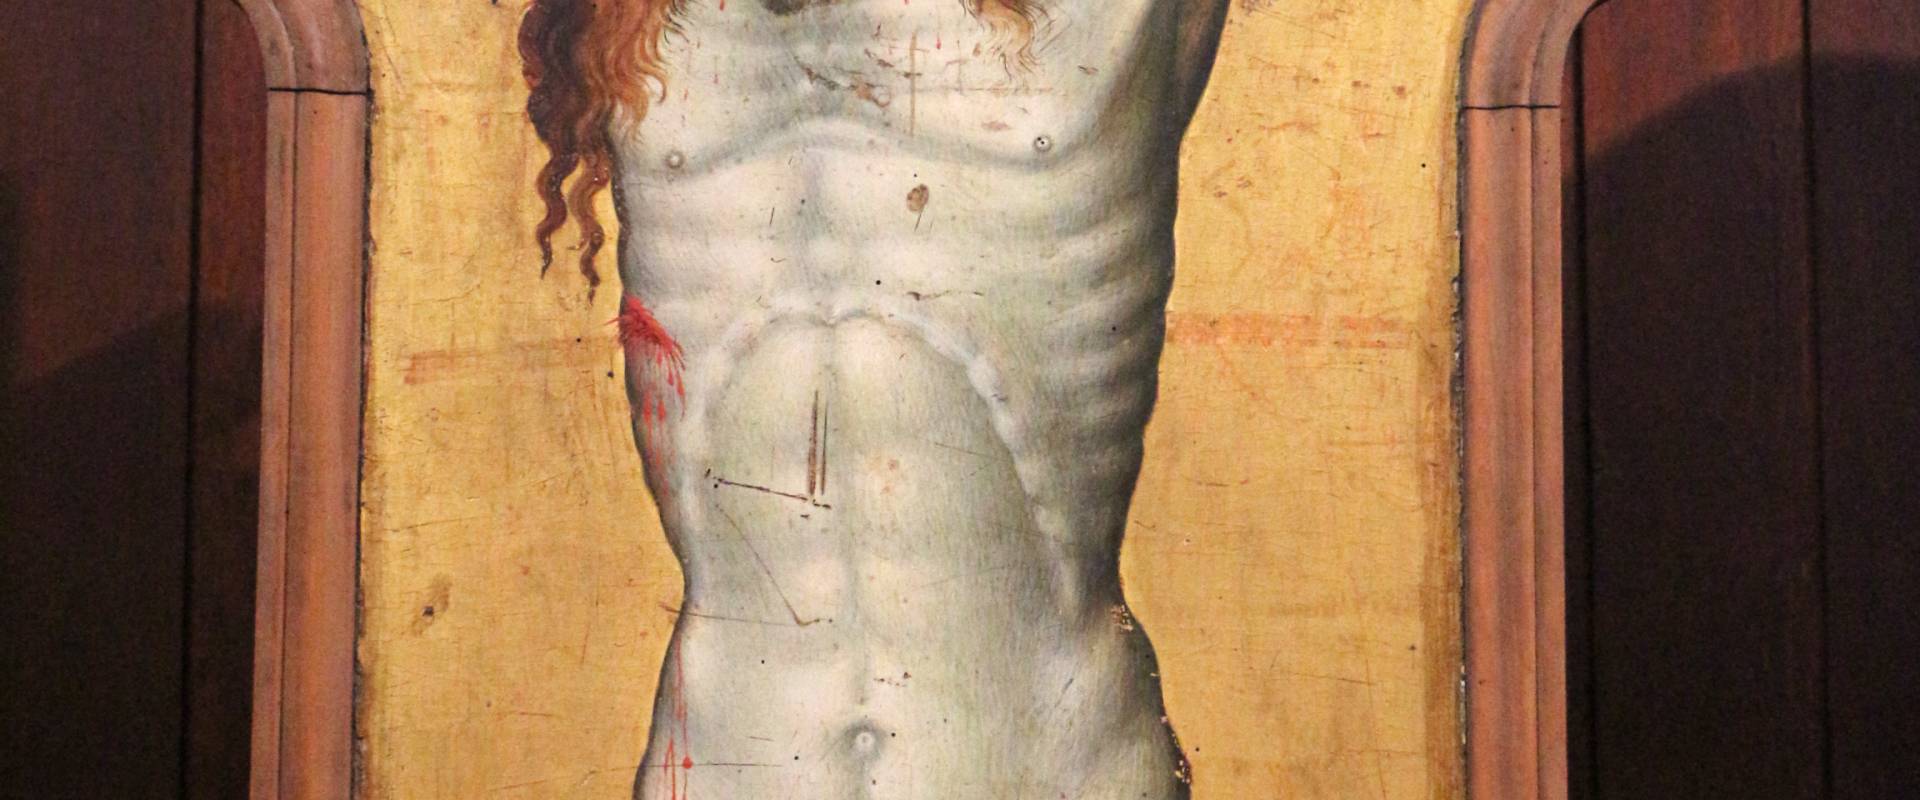 Michele di matteo, crocifisso, 1435-45 ca. 04 foto di Sailko